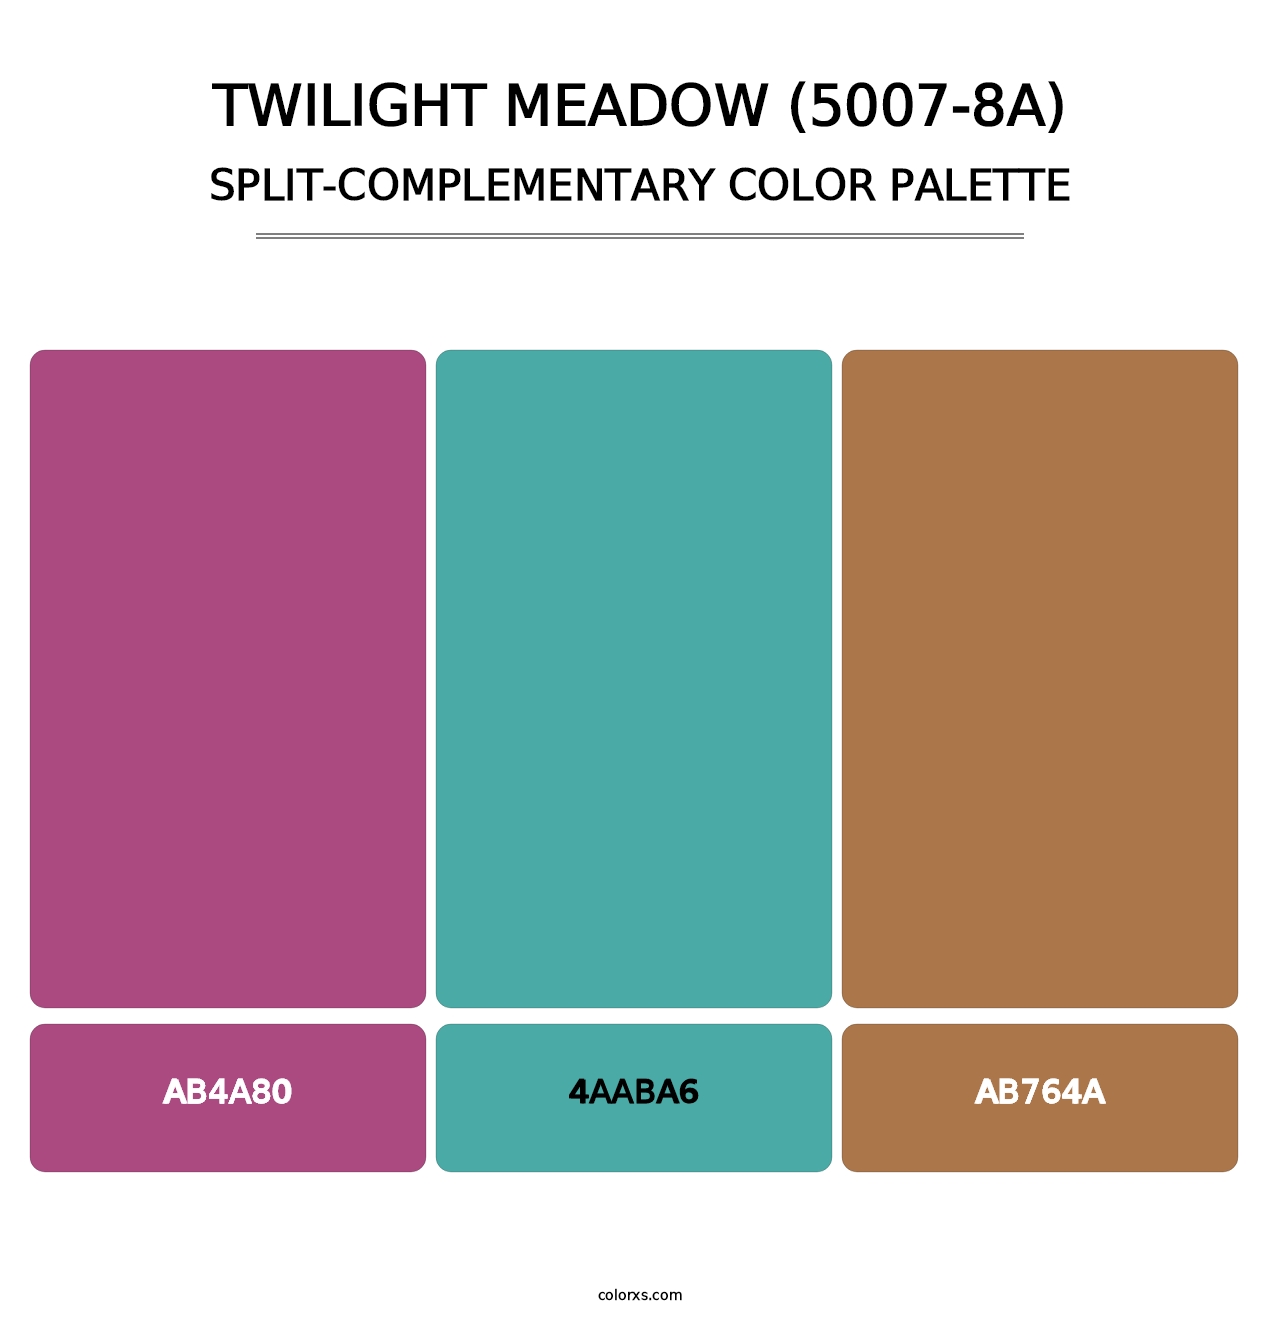 Twilight Meadow (5007-8A) - Split-Complementary Color Palette